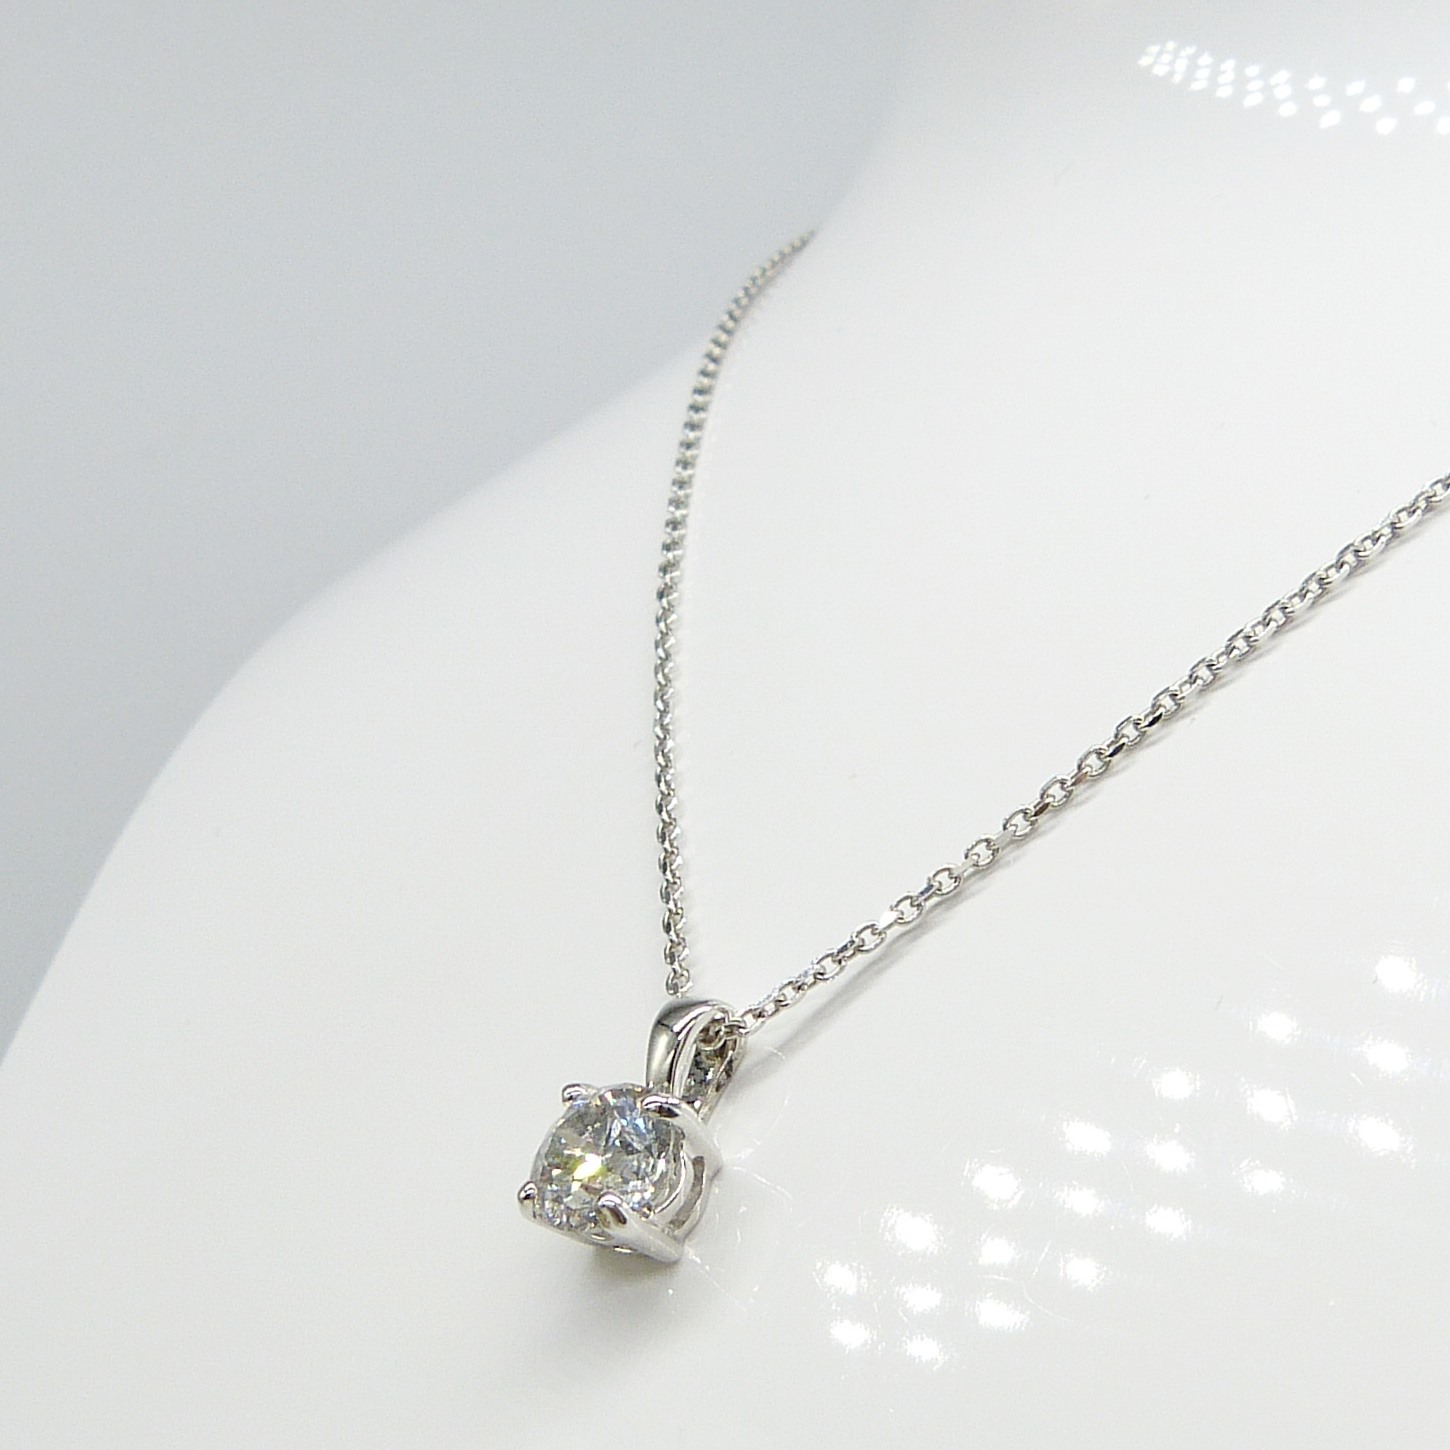 Certificated 1.24 carat, E colour round brilliant-cut diamond solitaire necklace, 18ct white gold - Image 2 of 9